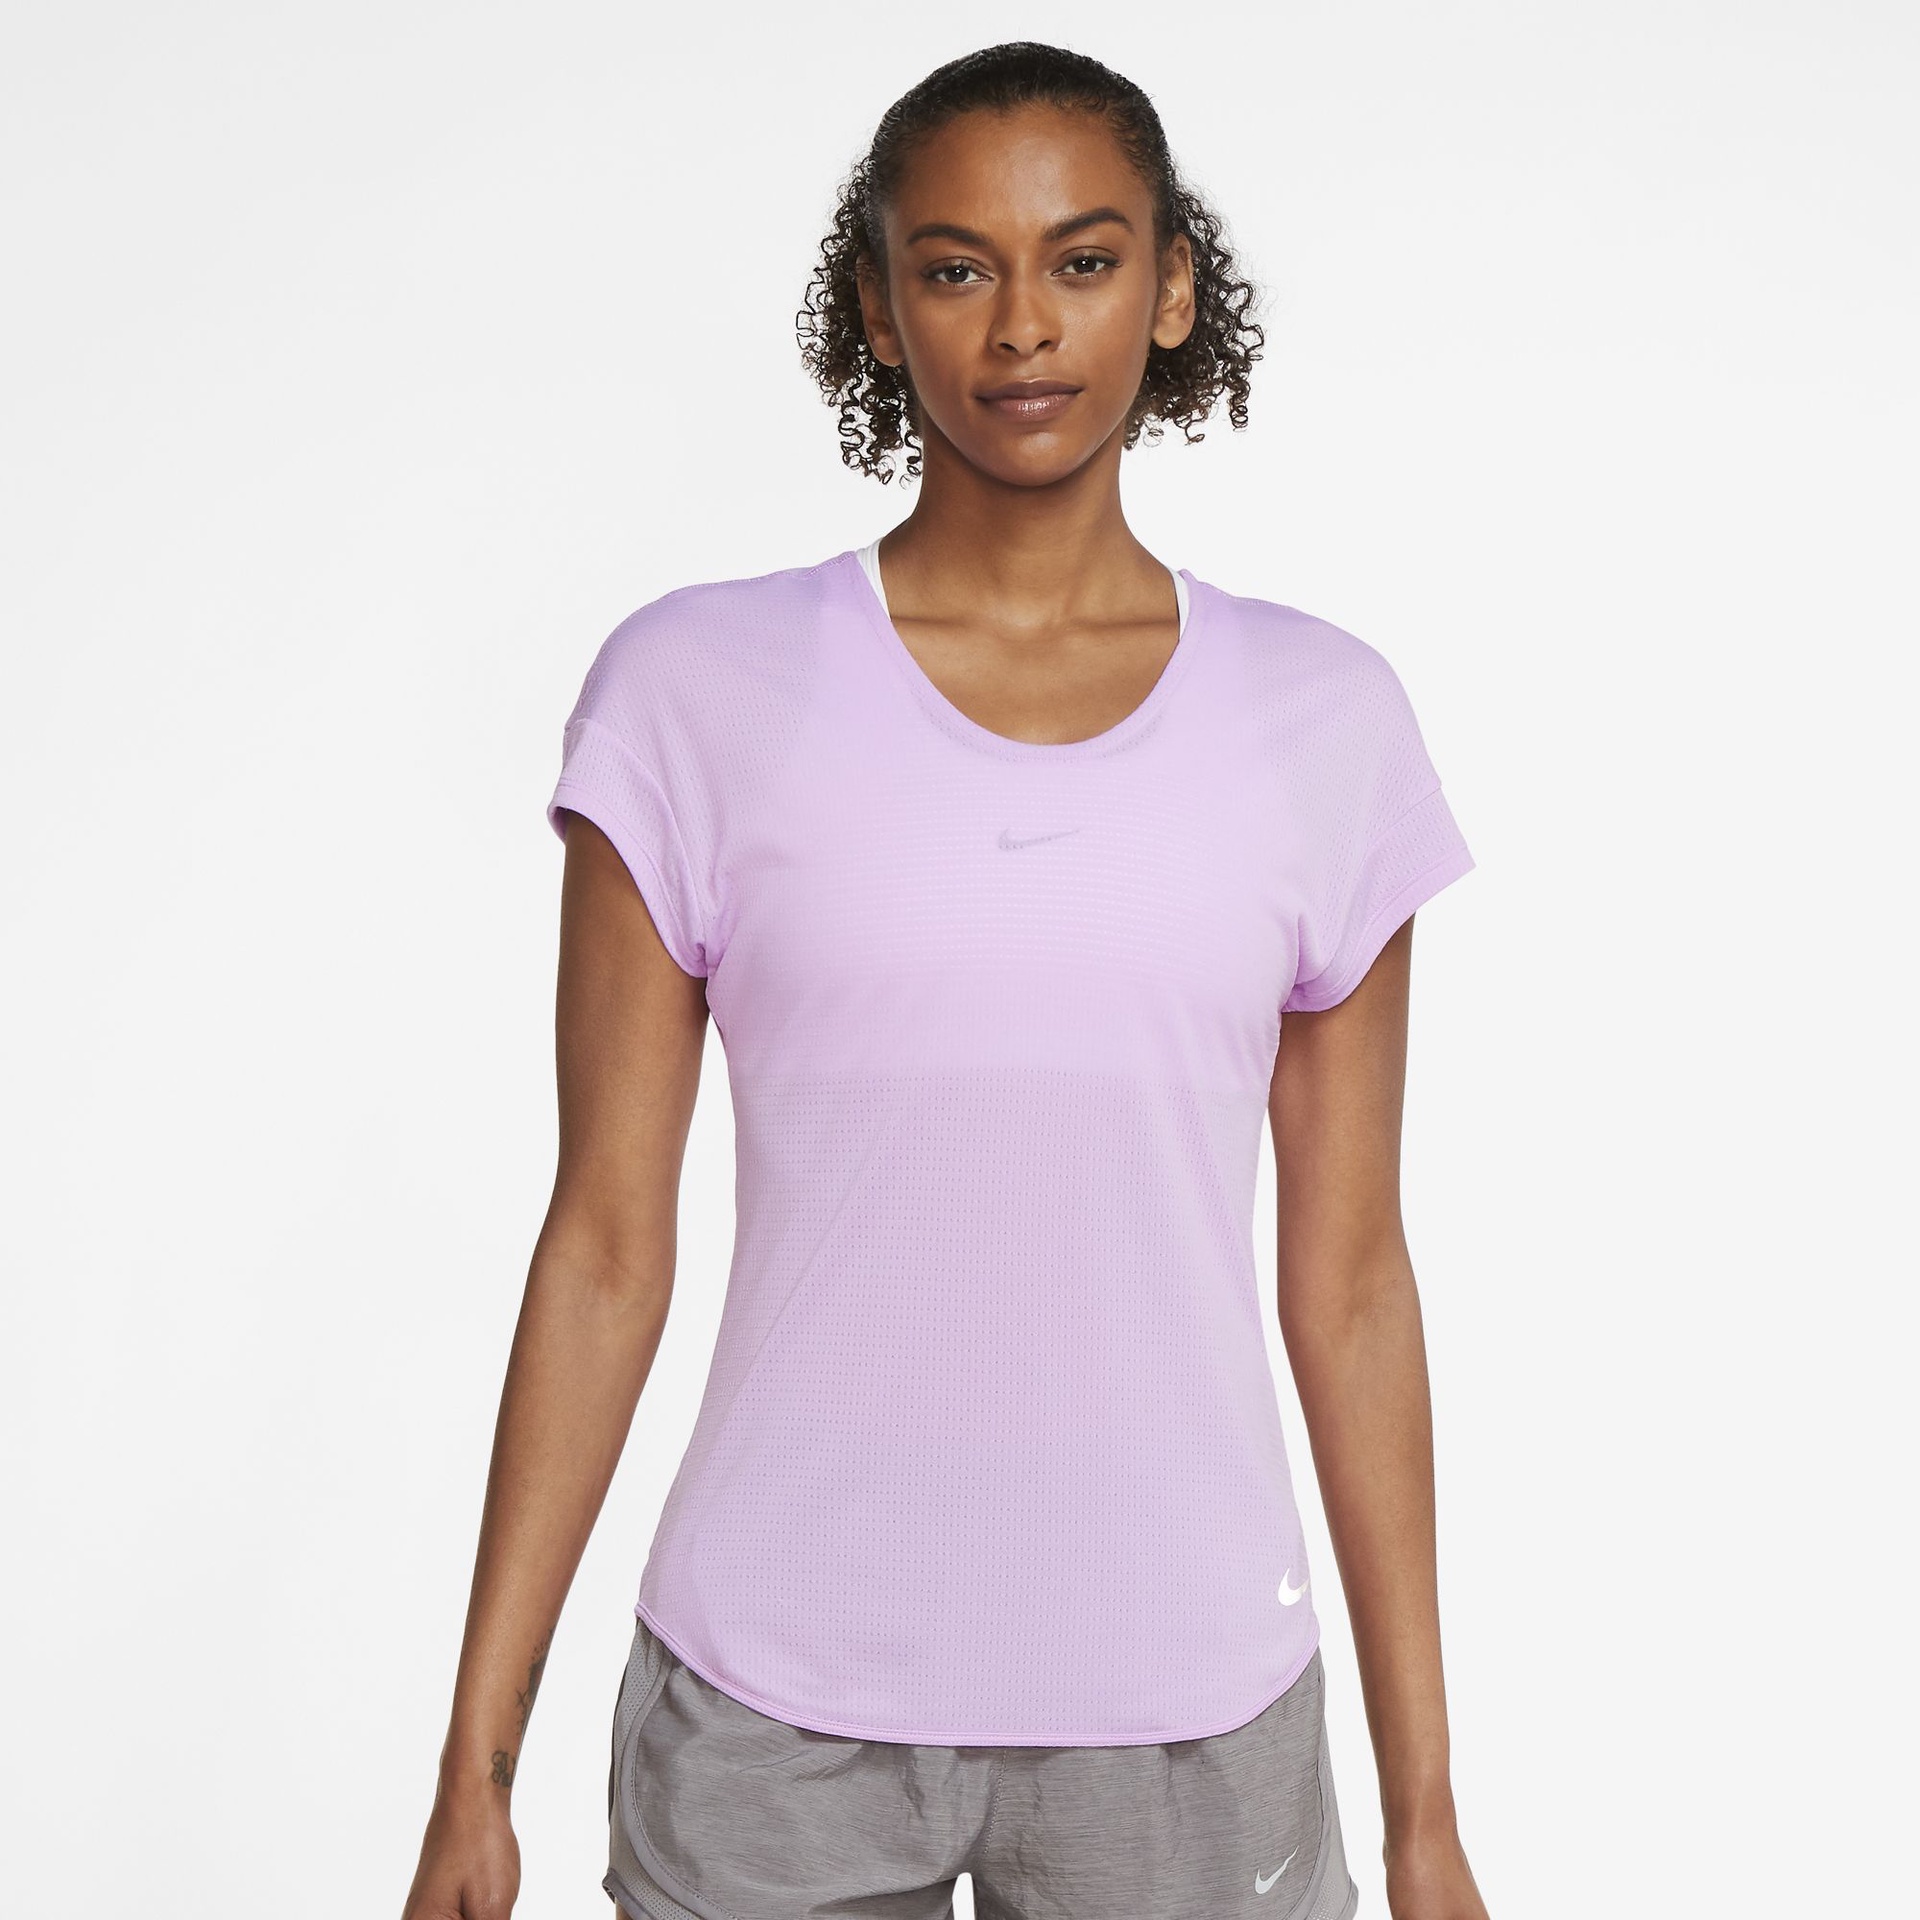 Nike Women's Breathe Cool Top - Fuchsia Glow/Reflective Silver ...